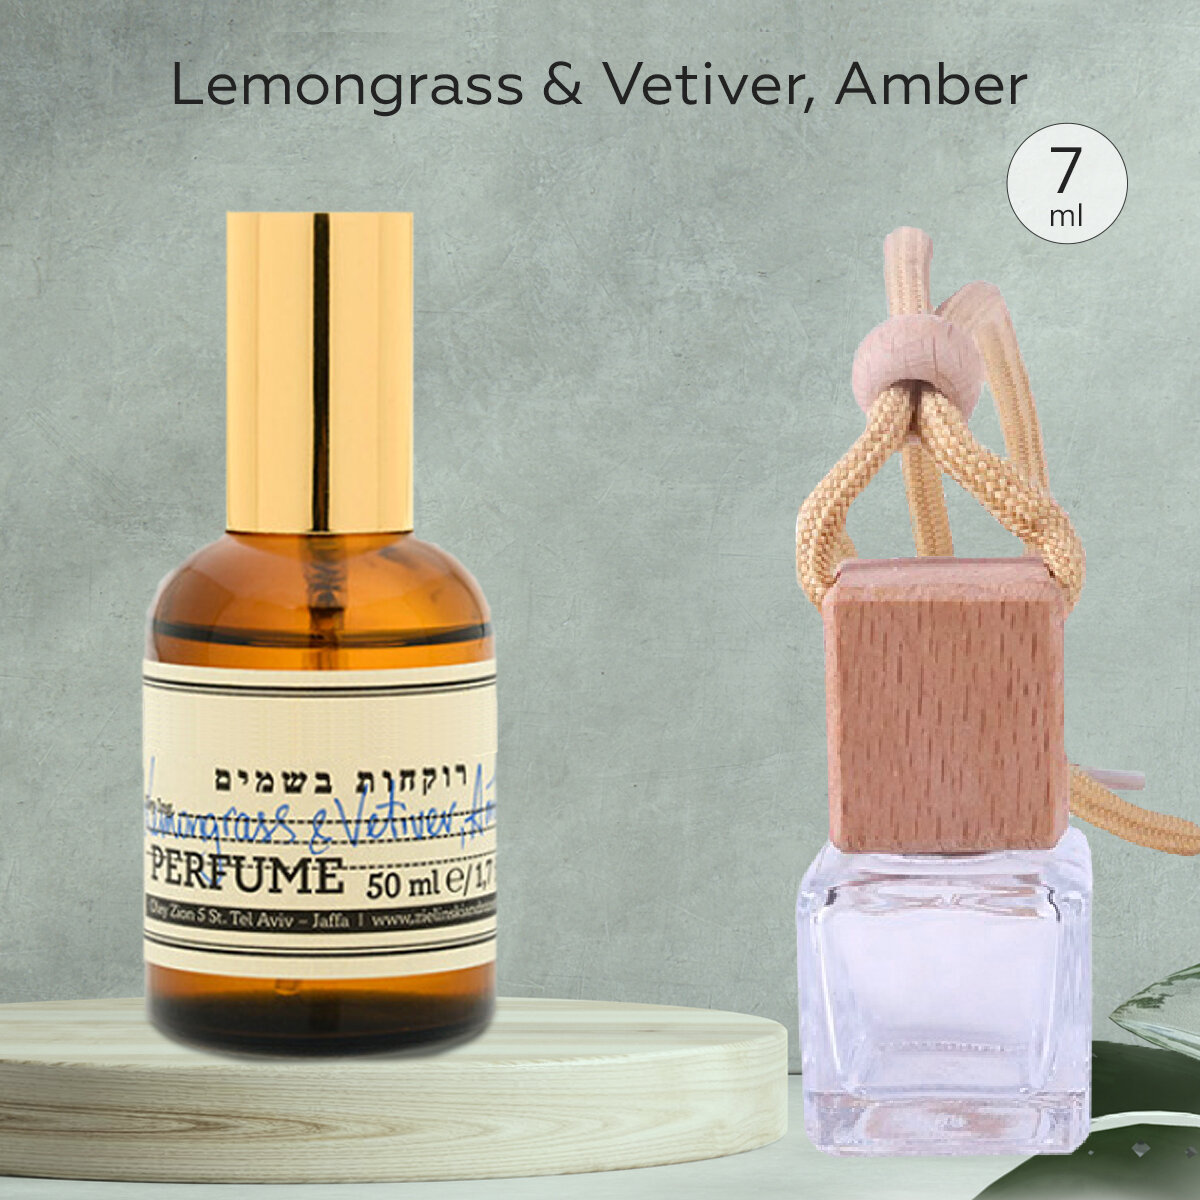 Gratus Parfum Lemongrass & Vetiver, Amber Автопарфюм 7 мл / Ароматизатор для автомобиля и дома